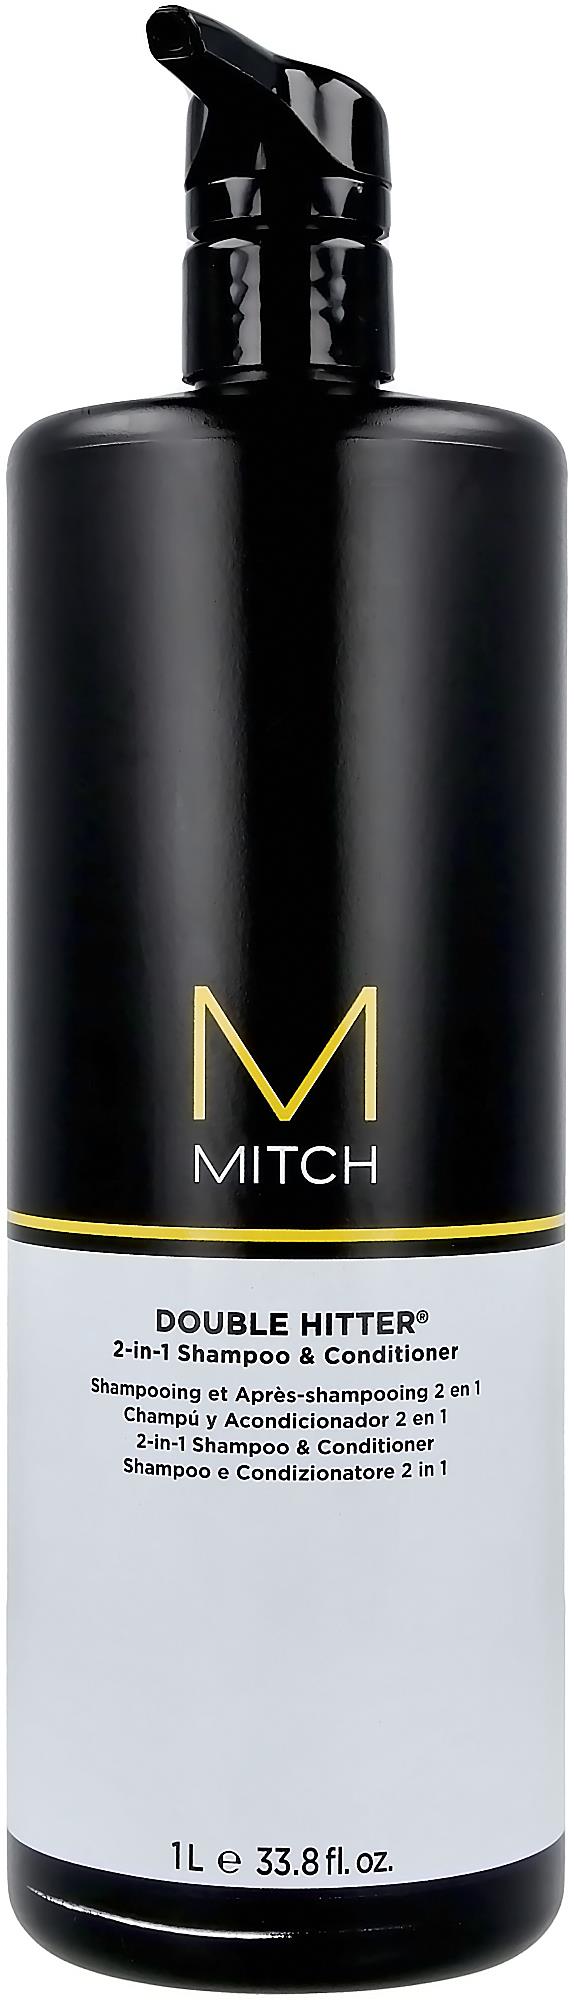 Paul Mitchell Mitch Hitter Shampoo & Conditioner 1000 ml lyko.com